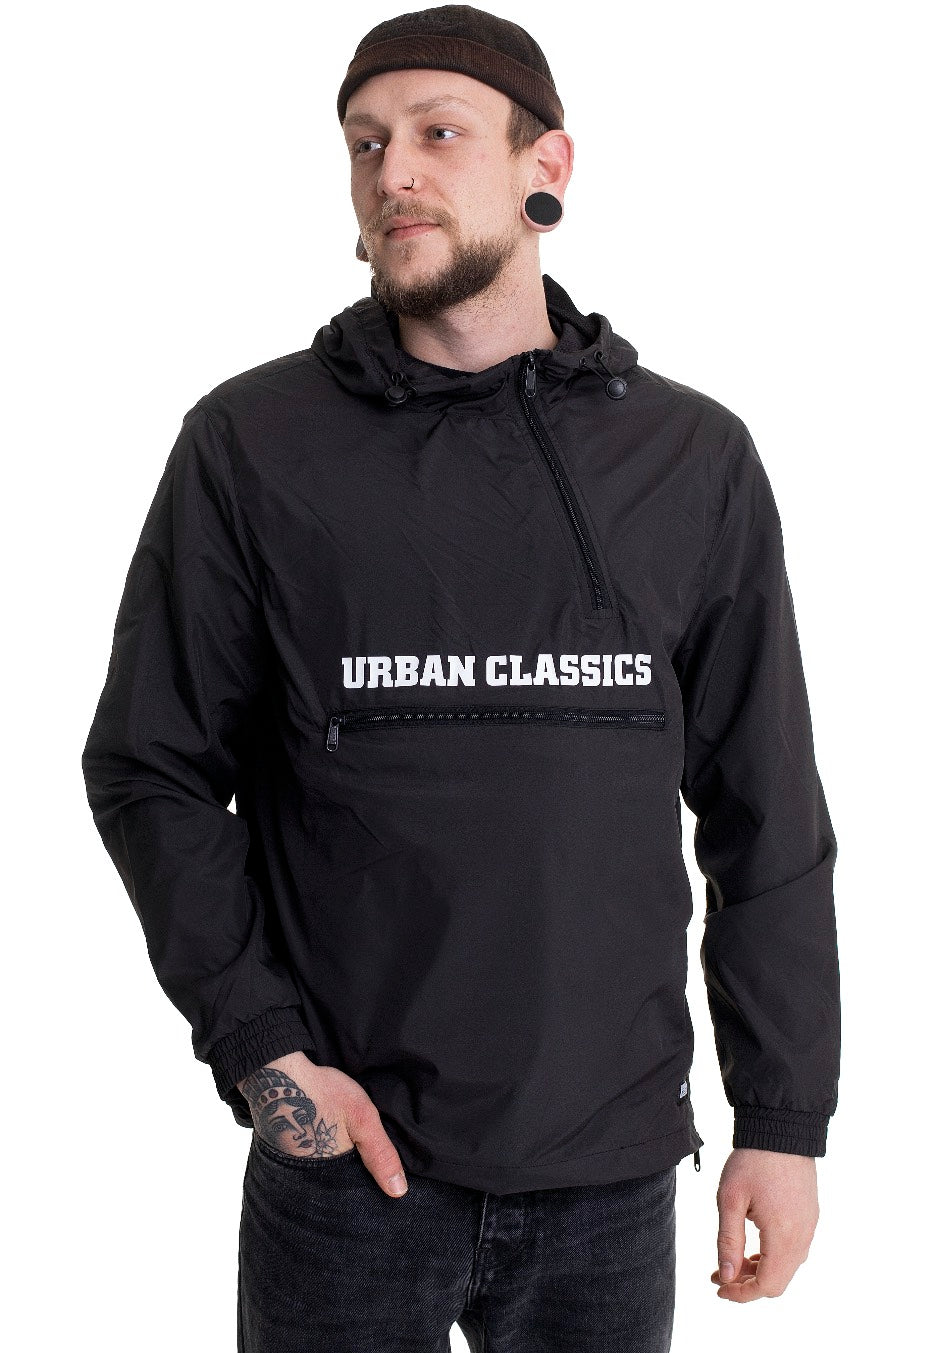 Urban Classics - Commuter Pull Over Black - Jacket